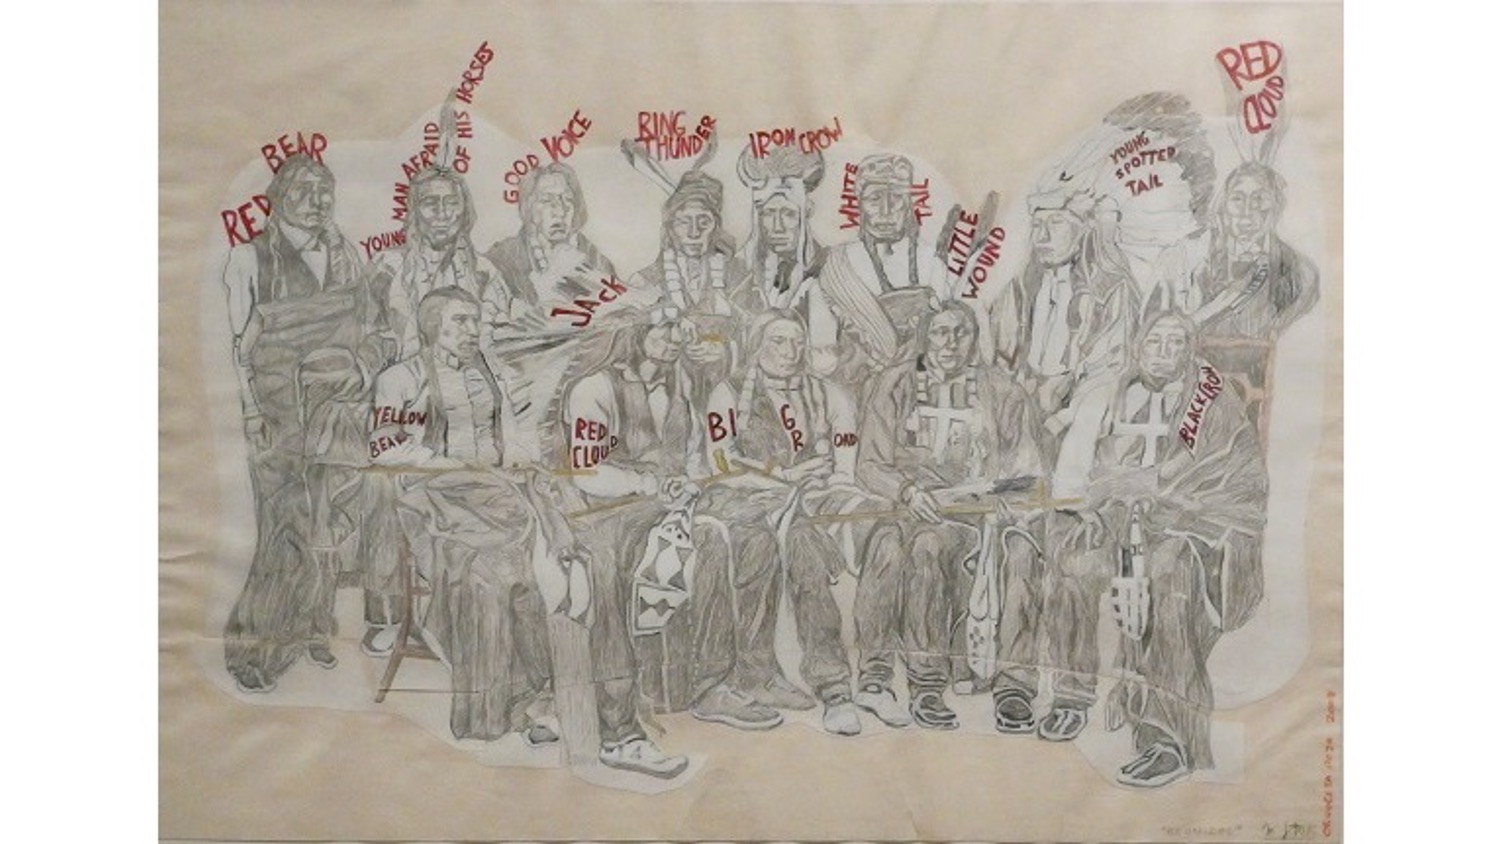 Magdalena Jitrik. Argentinean artist born in 1966. "Orquesta roja. Reunidos", 2008. Collage. Pencil and ink on paper. 31,7 x 44,7 cm